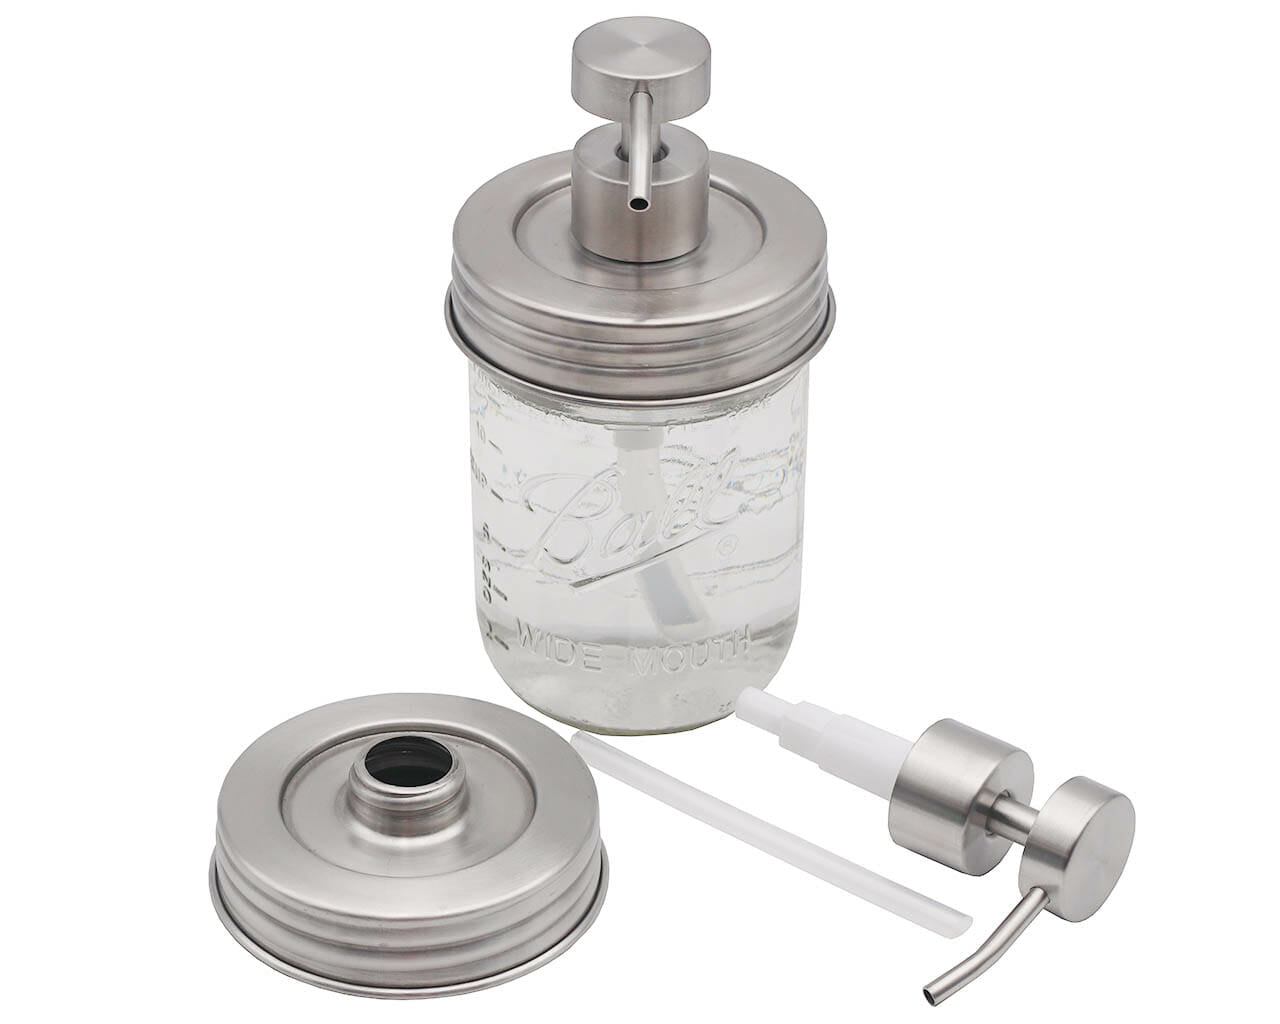 Satin / Brushed Finish Soap Pump Dispensers for Mason Jars